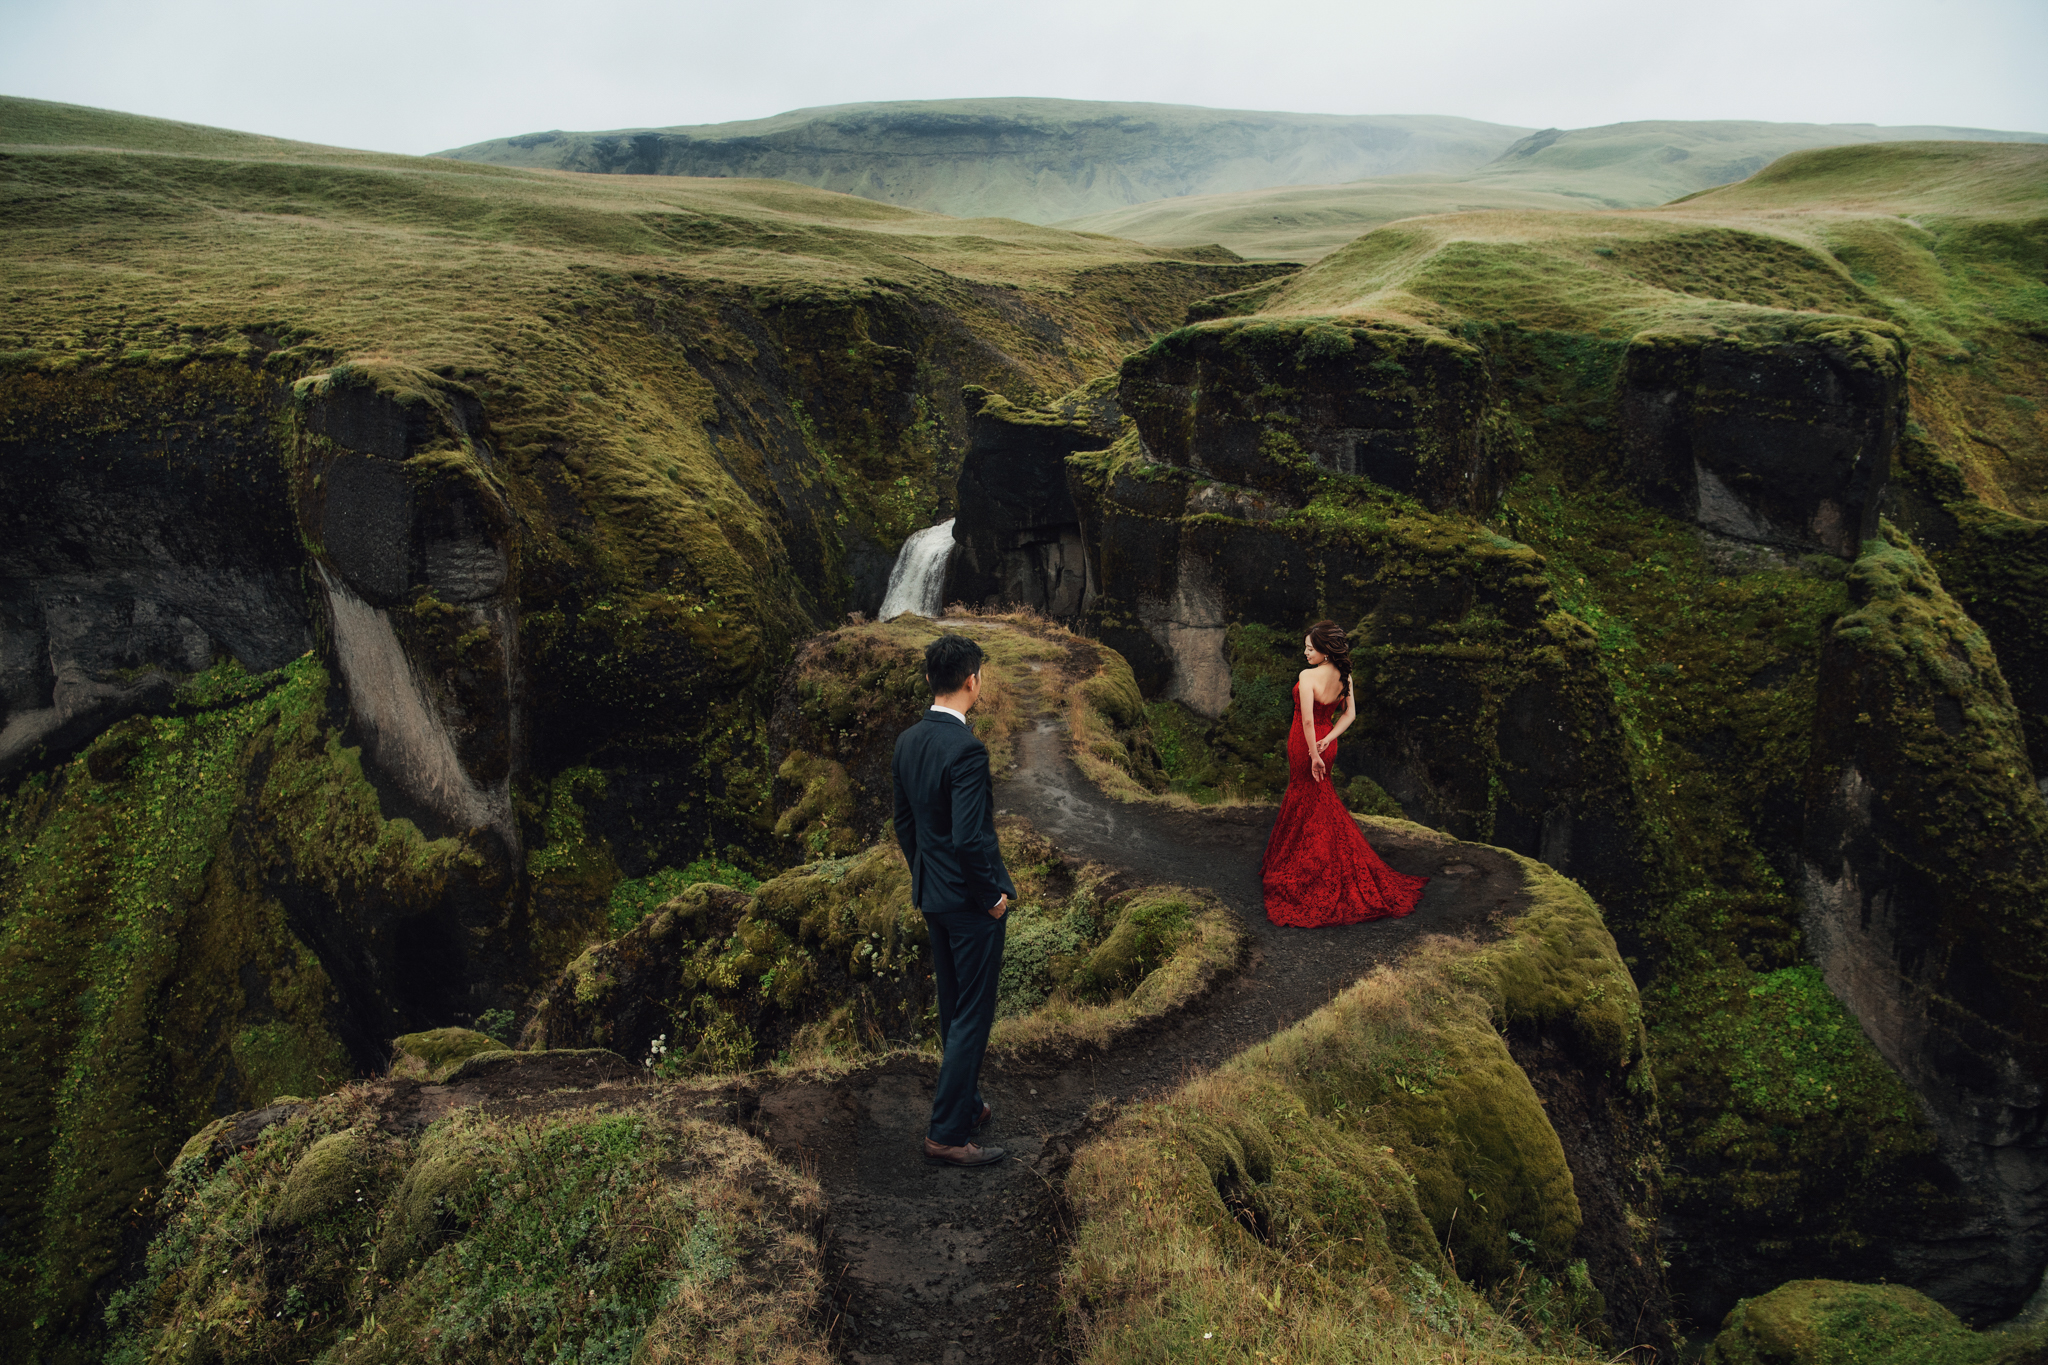 Donfer, EASTERN WEDDING, Iceland, Pre-Wedding, 海外婚紗, 冰島婚紗, 冰河湖, 教堂山, 羽毛和峽谷, 黑沙灘